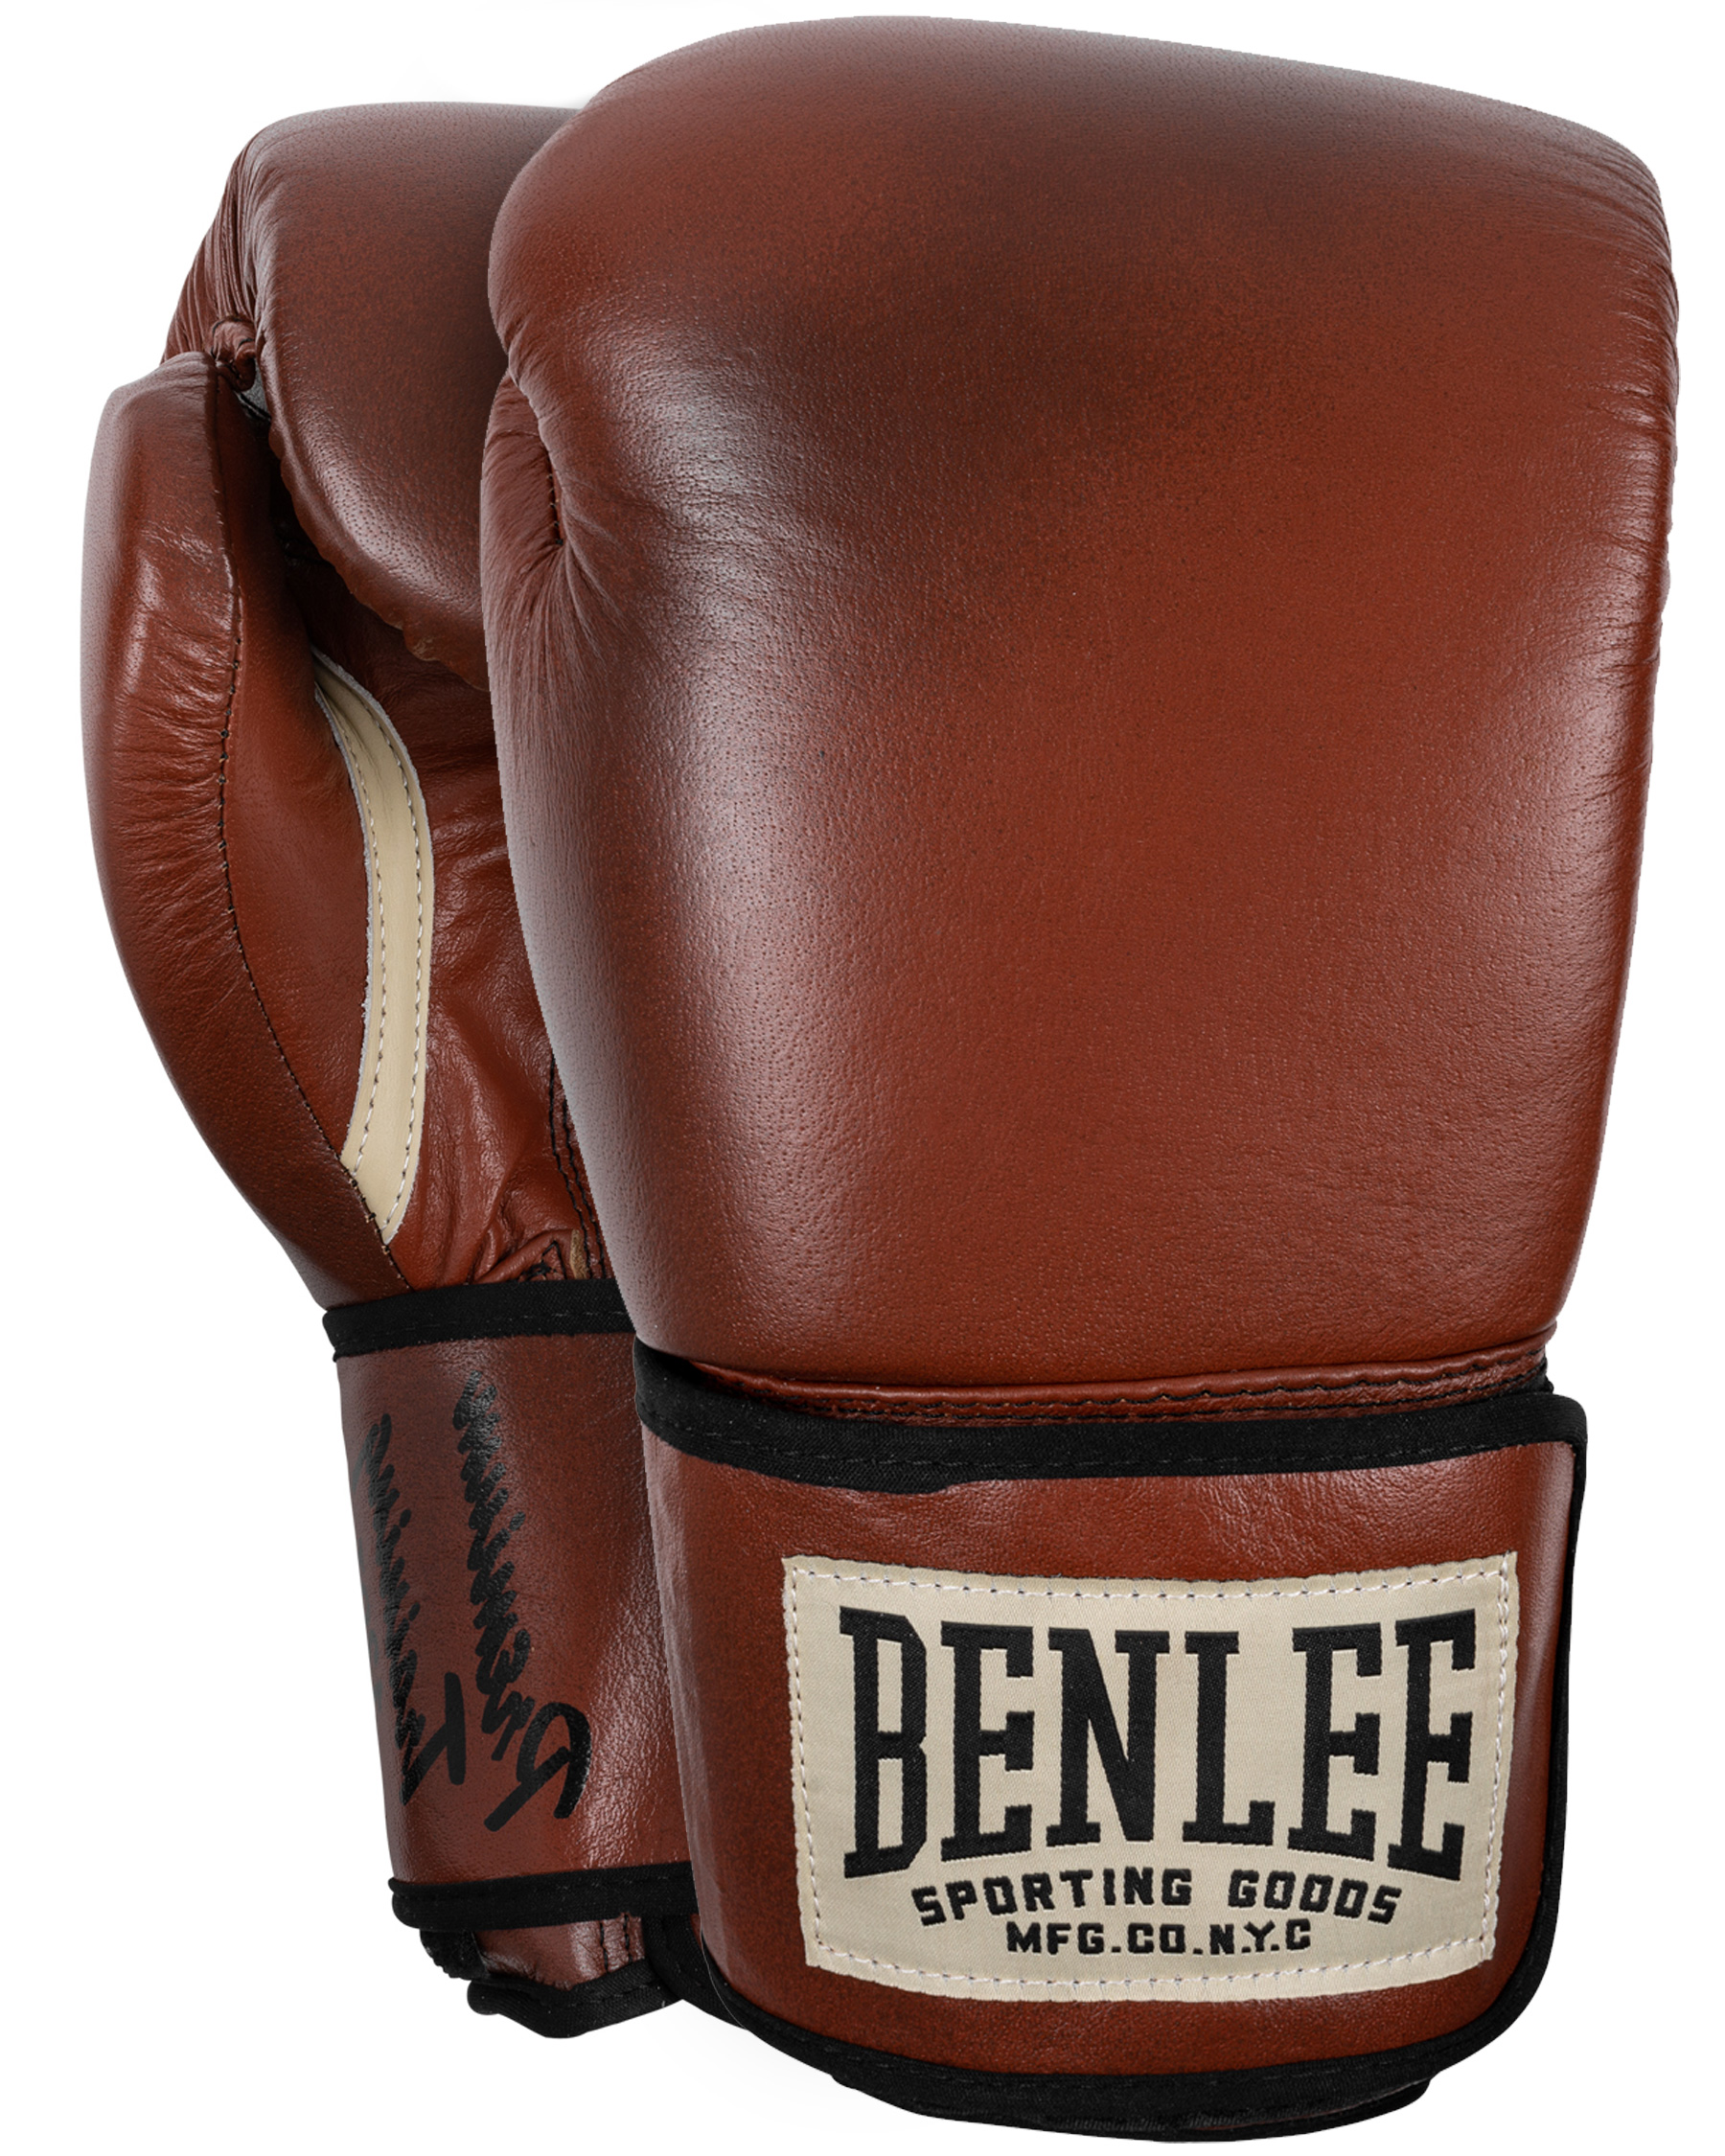 BenLee Leather boxing glove Premium Training